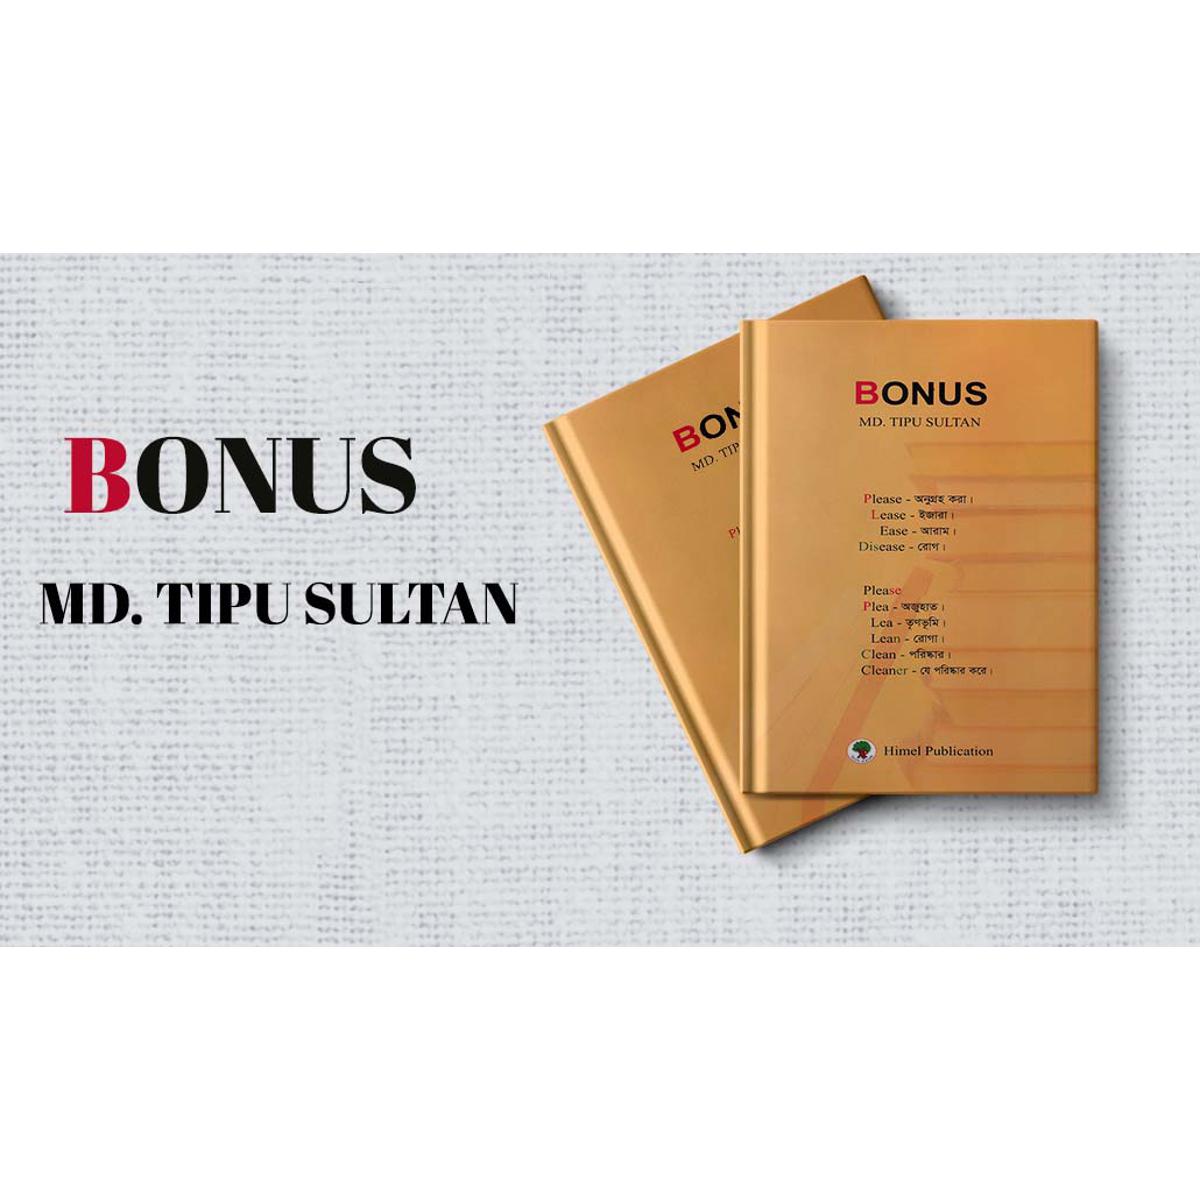 Bonus by Tipu Sultan